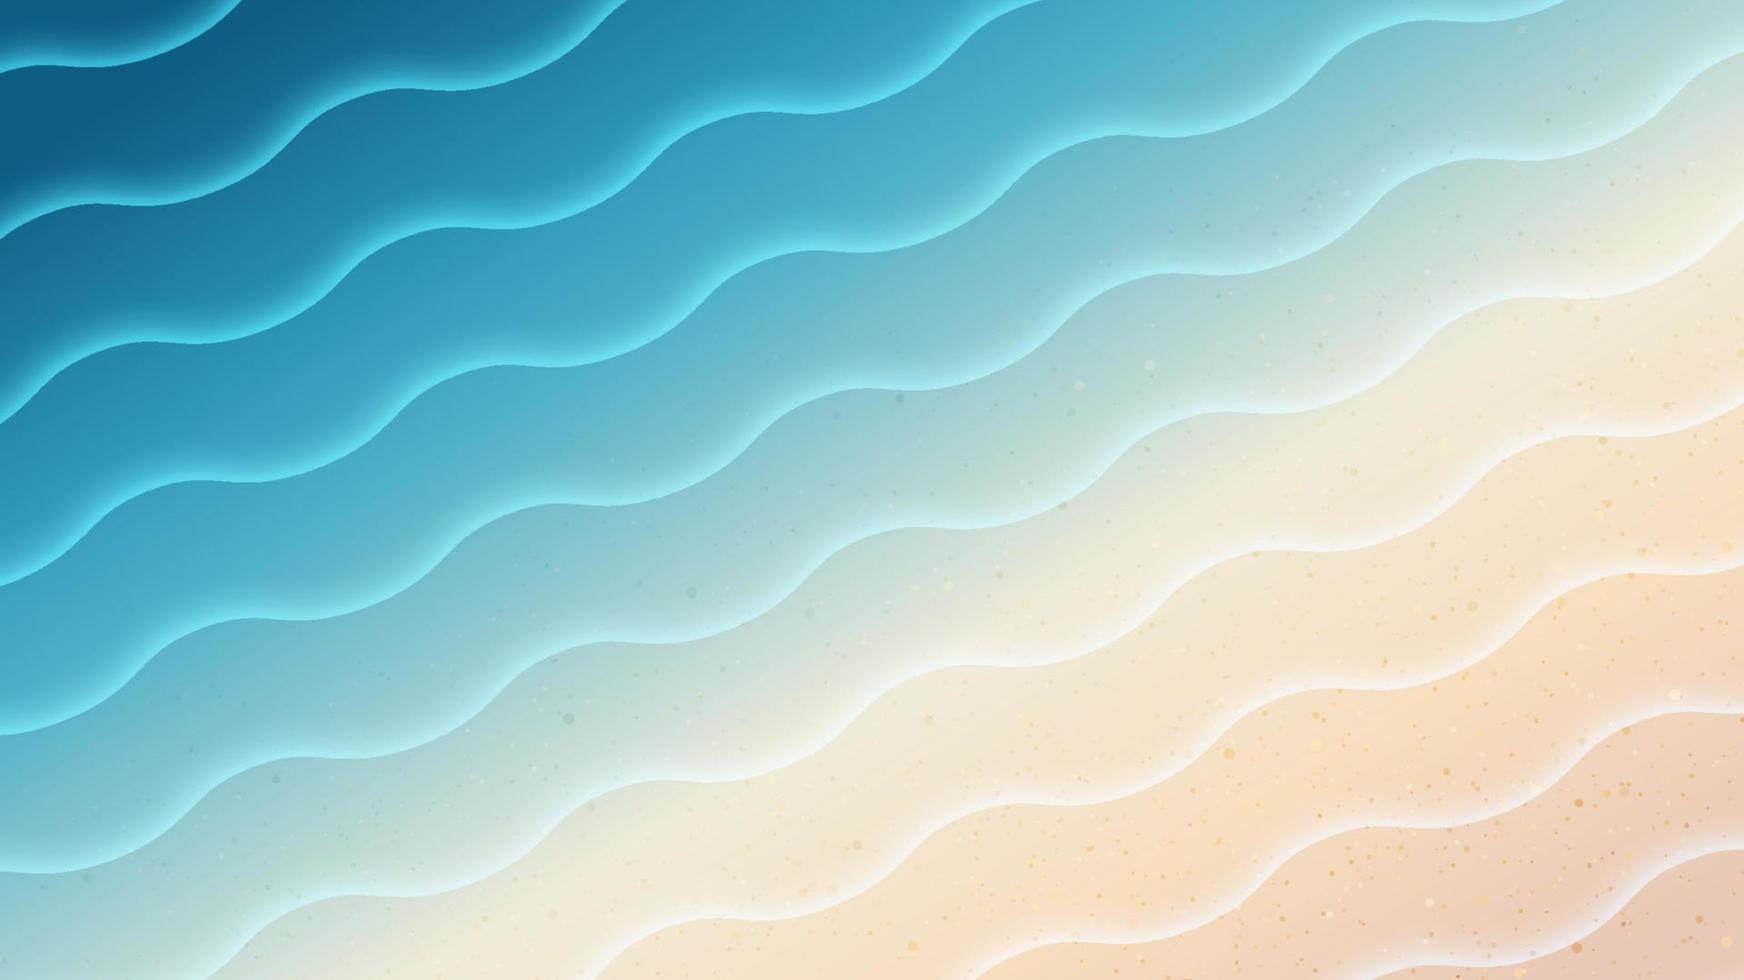 strand zand en Golf blauw zee natuur achtergrond vector